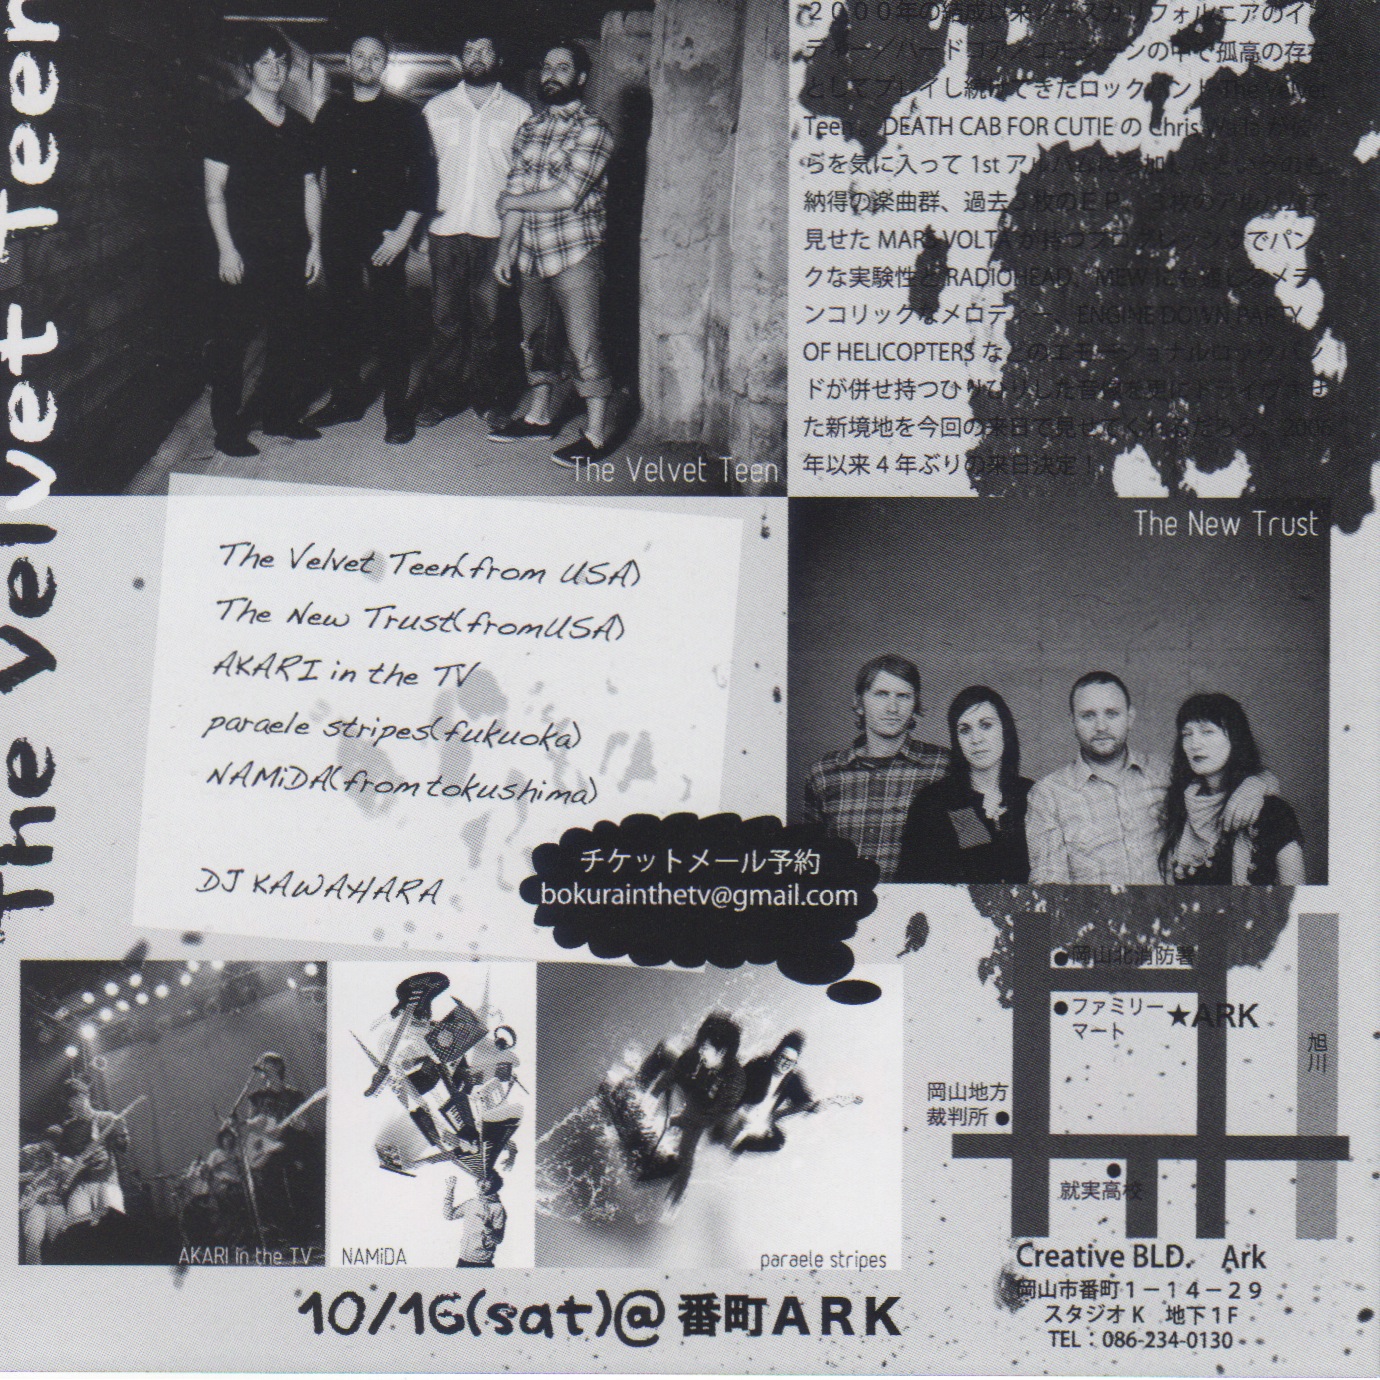 The Velvet Teen japan tour 2010 at OKAYAMA